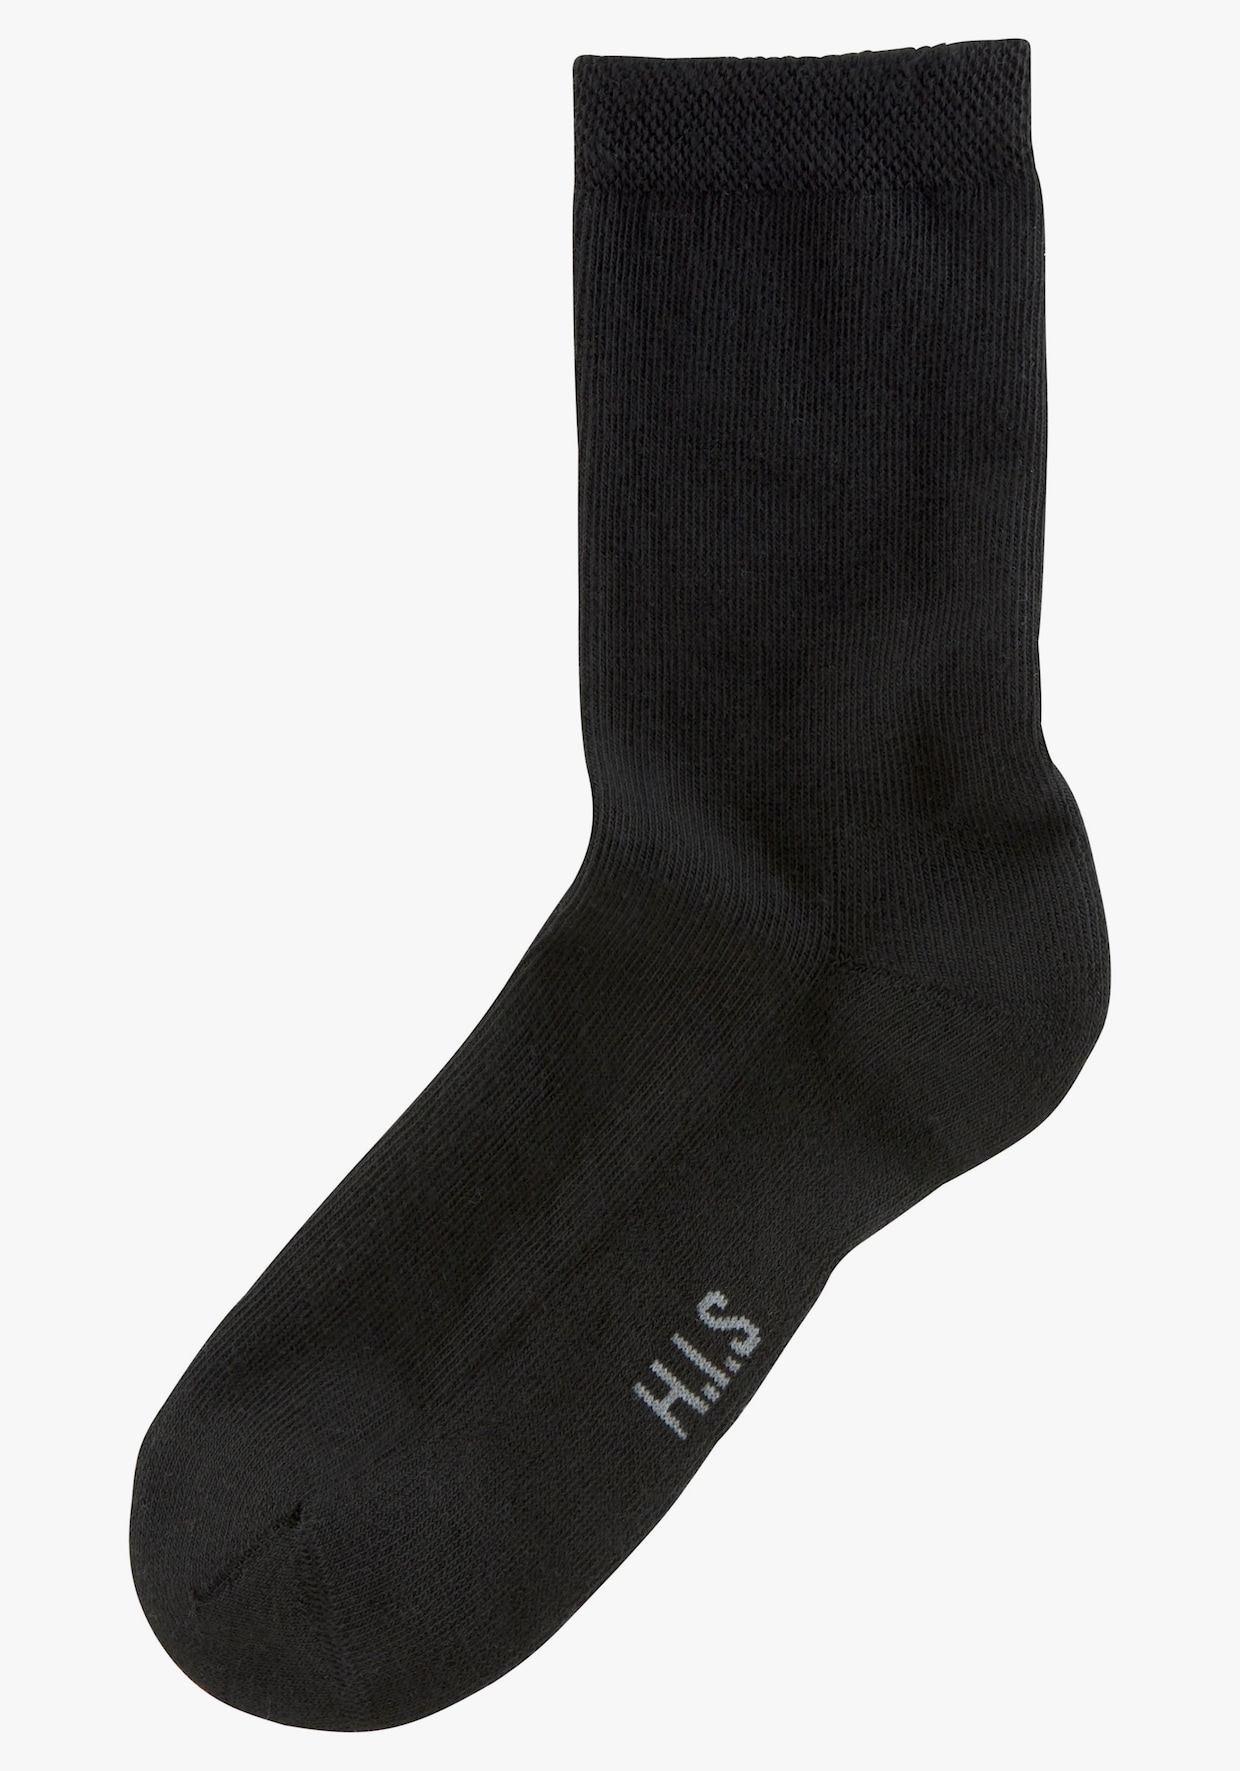 H.I.S Socken - 2x schwarz, 2x jeans-melange, 2x grau-melange